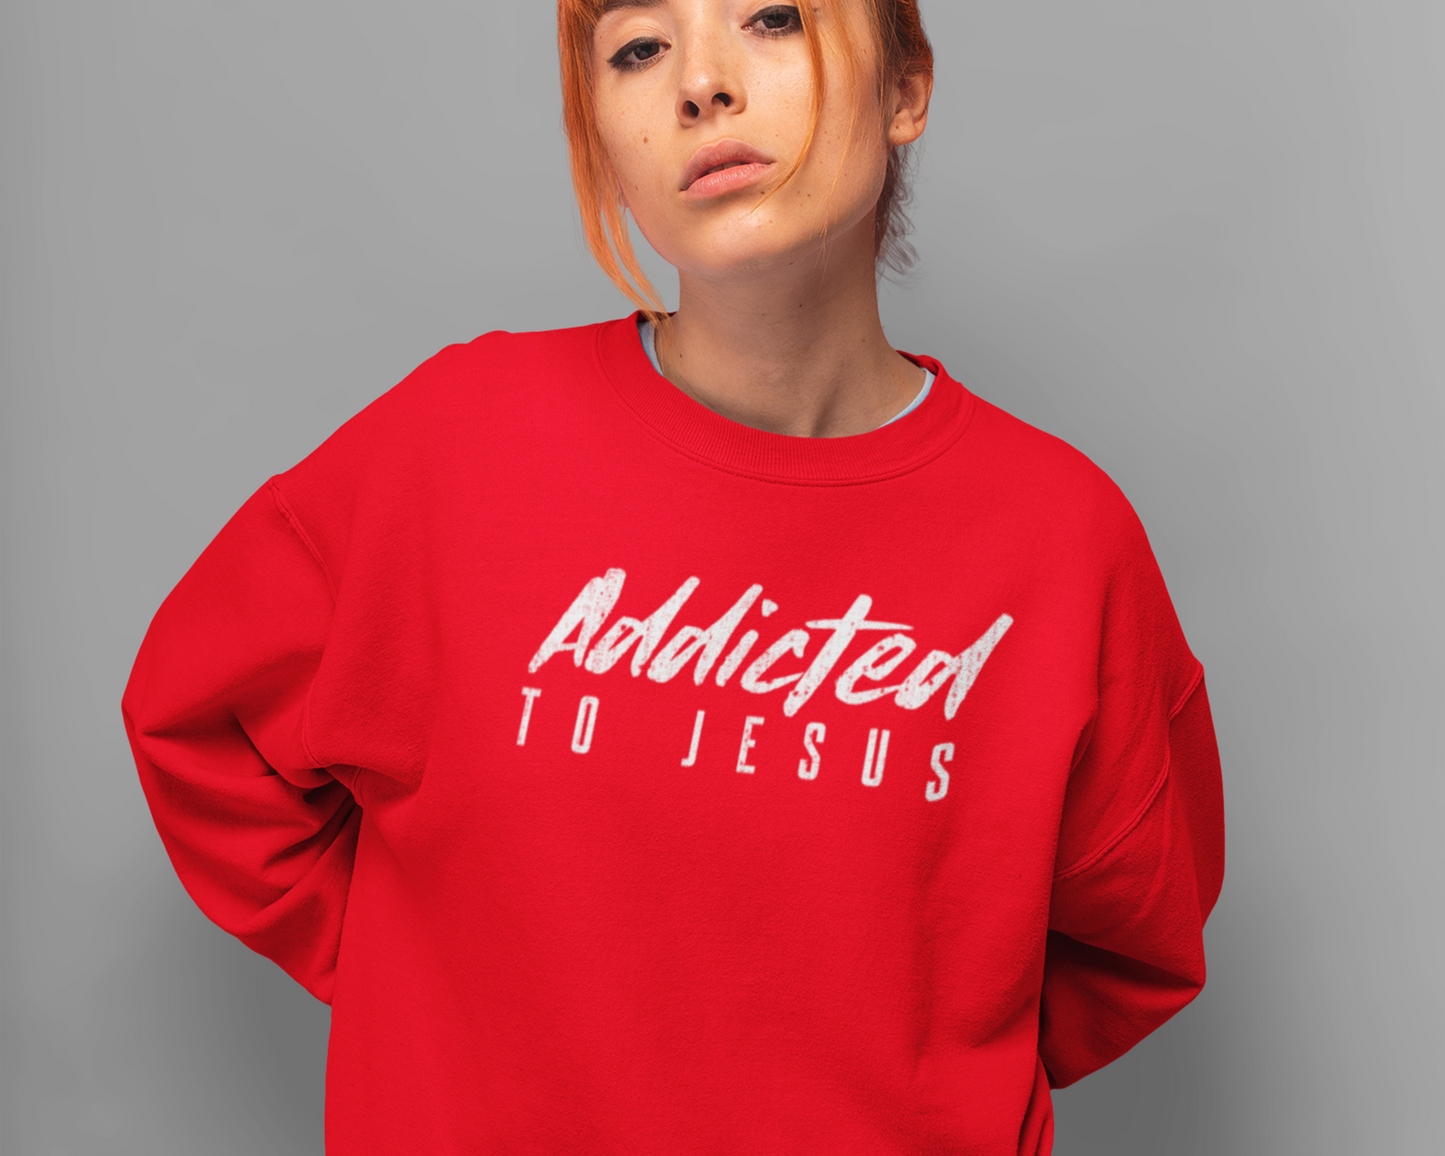 Addicted To Jesus Christian Sweatshirt For Women